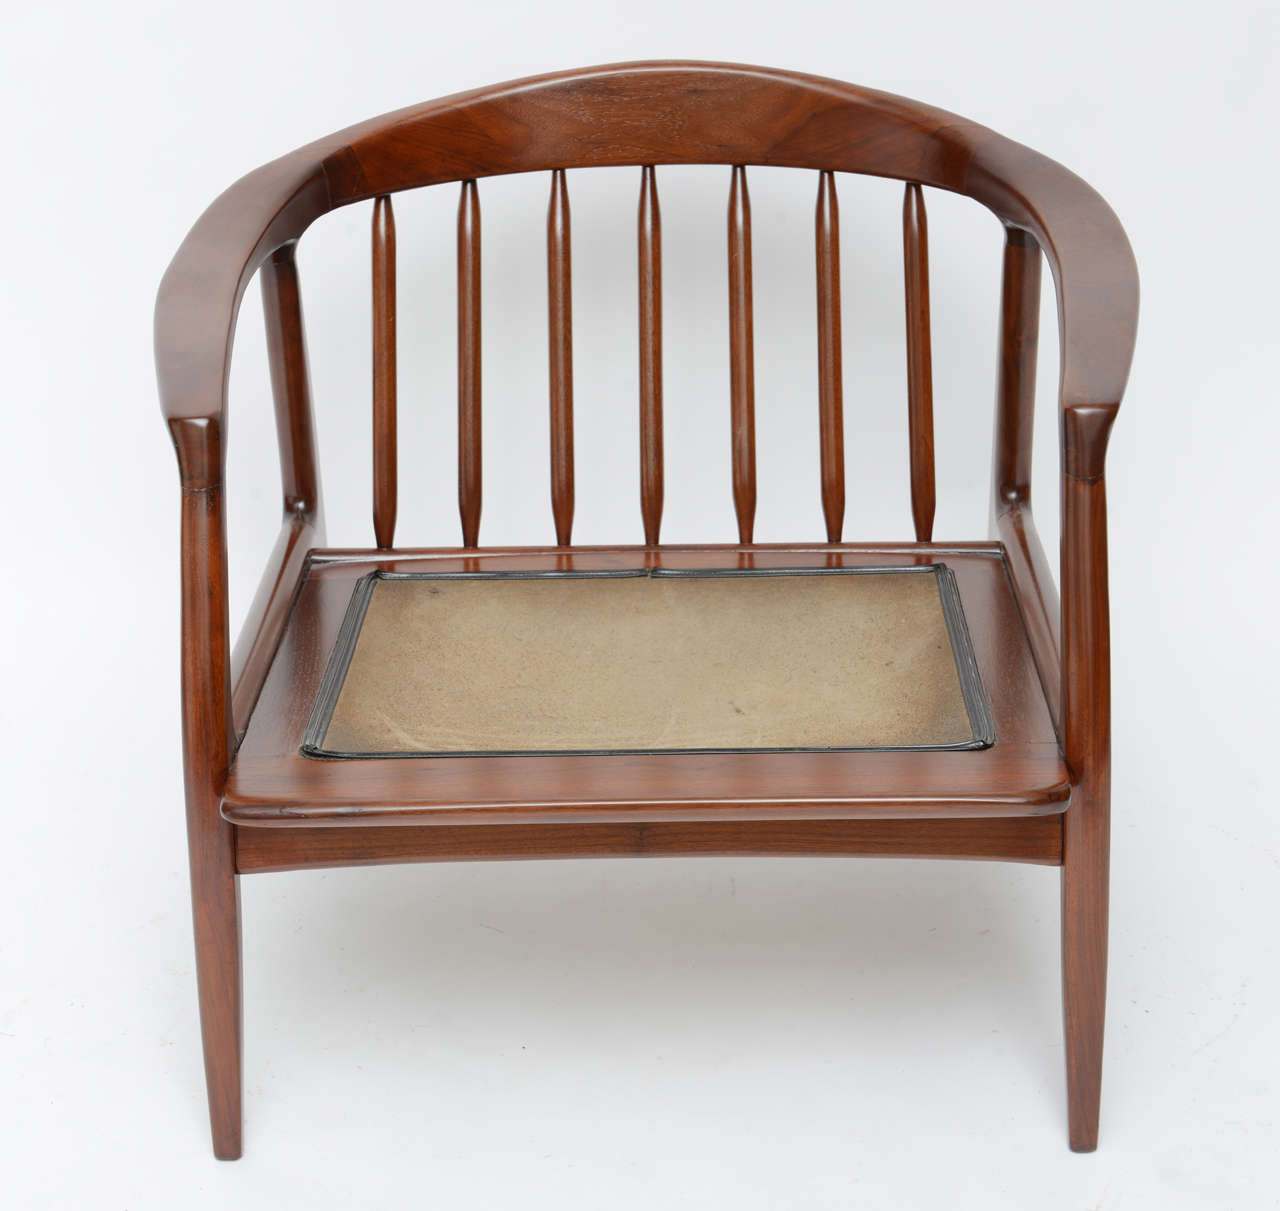 Gorgeous wood arm chair by Milo Baughman.